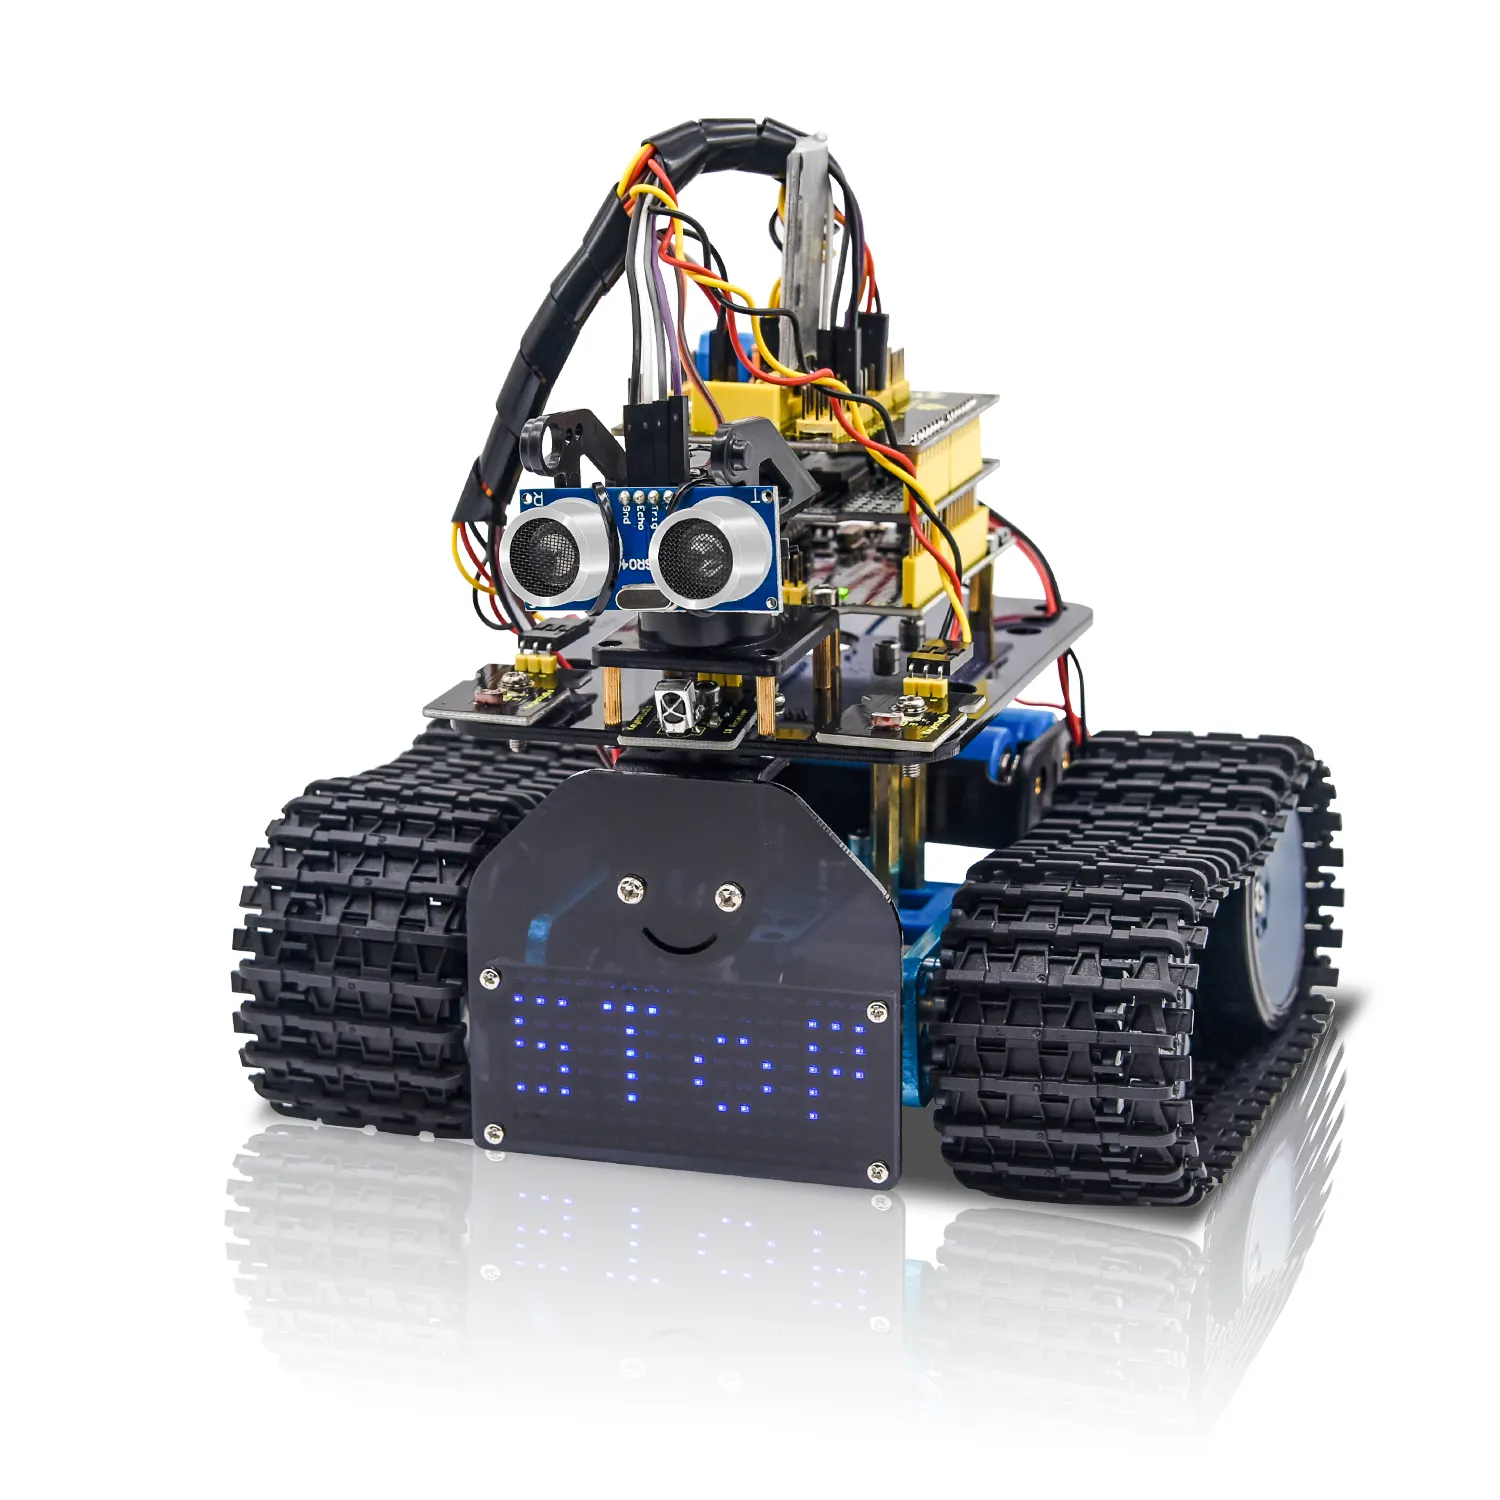 OEM Keyestudio ชุดคิตหุ่นยนต์ DIY ขนาดเล็ก,V2.0หุ่นยนต์บลูทูธอัจฉริยะชุดหุ่นยนต์ประกอบสำหรับ Arduino